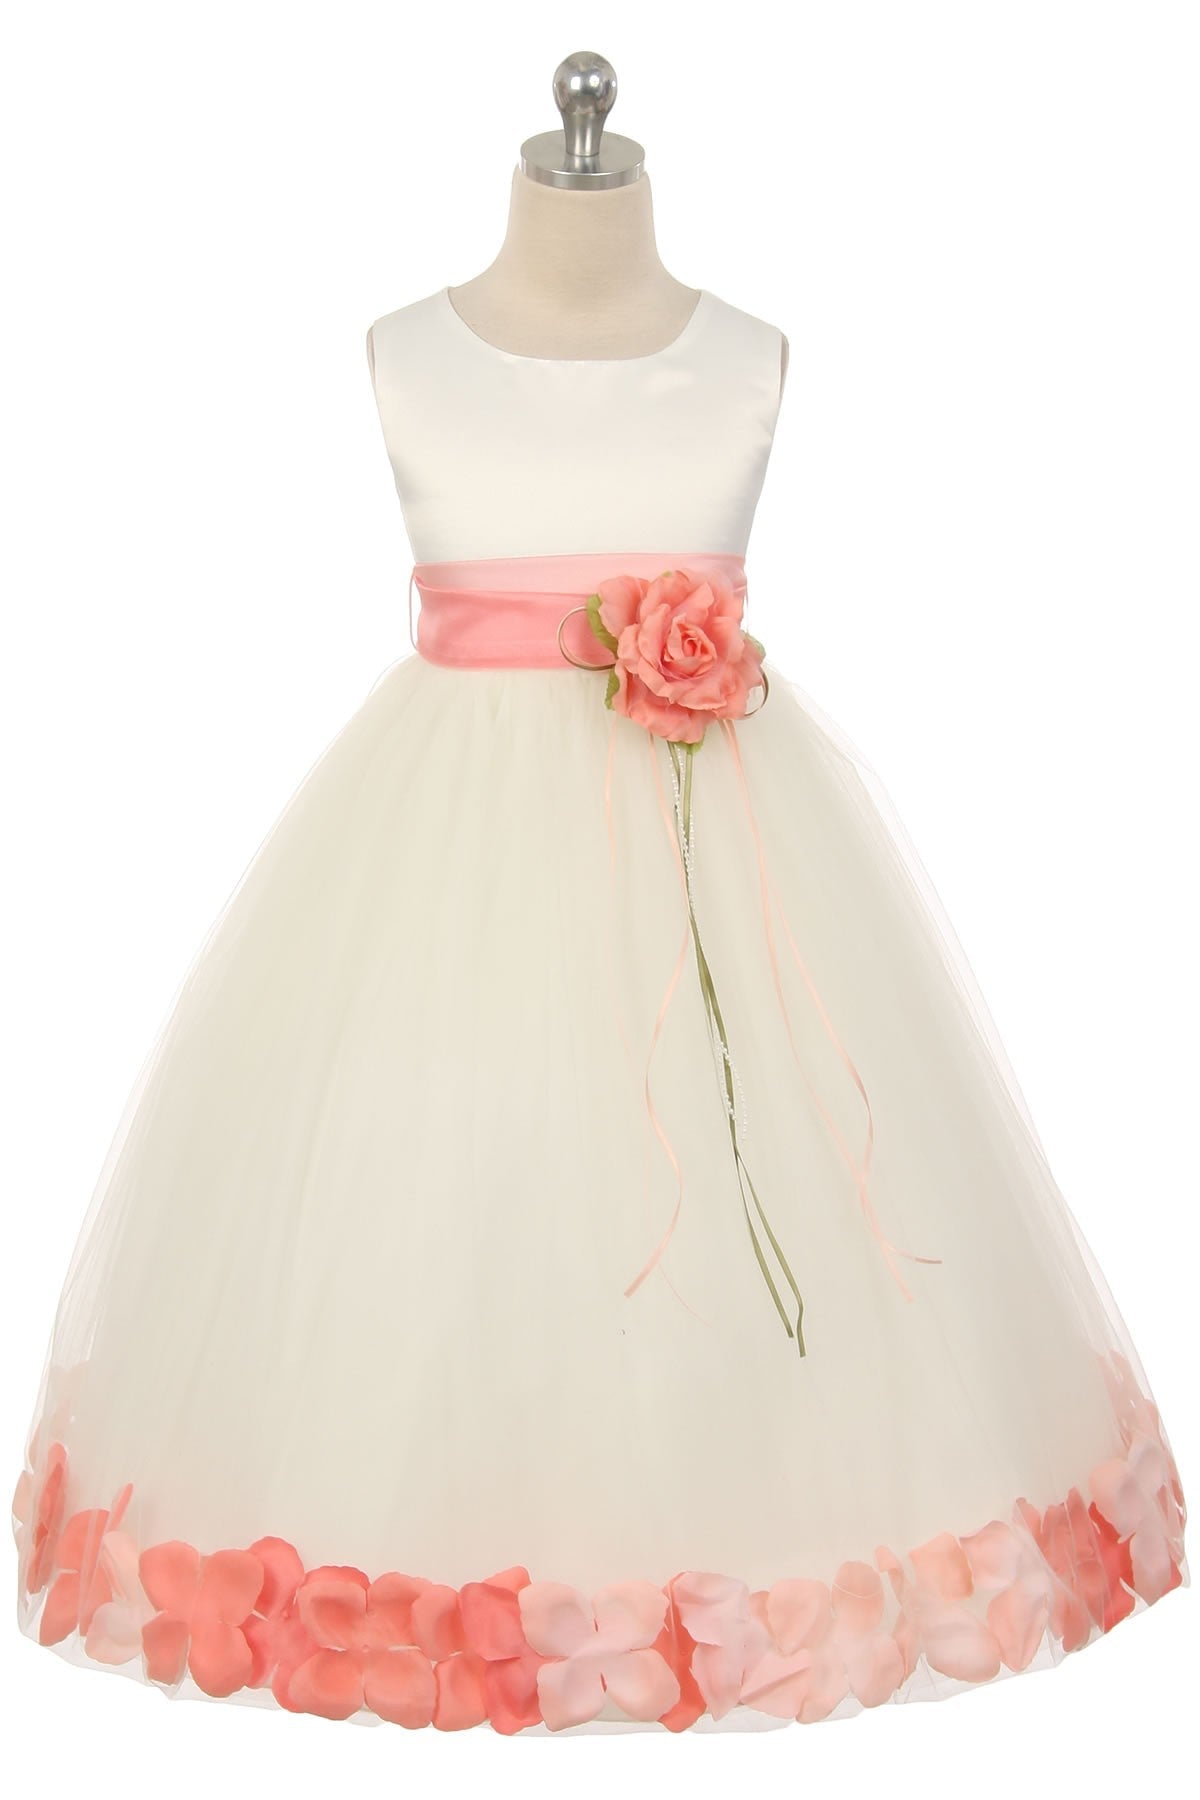 160B+[SASH] White Satin Flower Petal Plus Size Girl Dress with Organza Sash